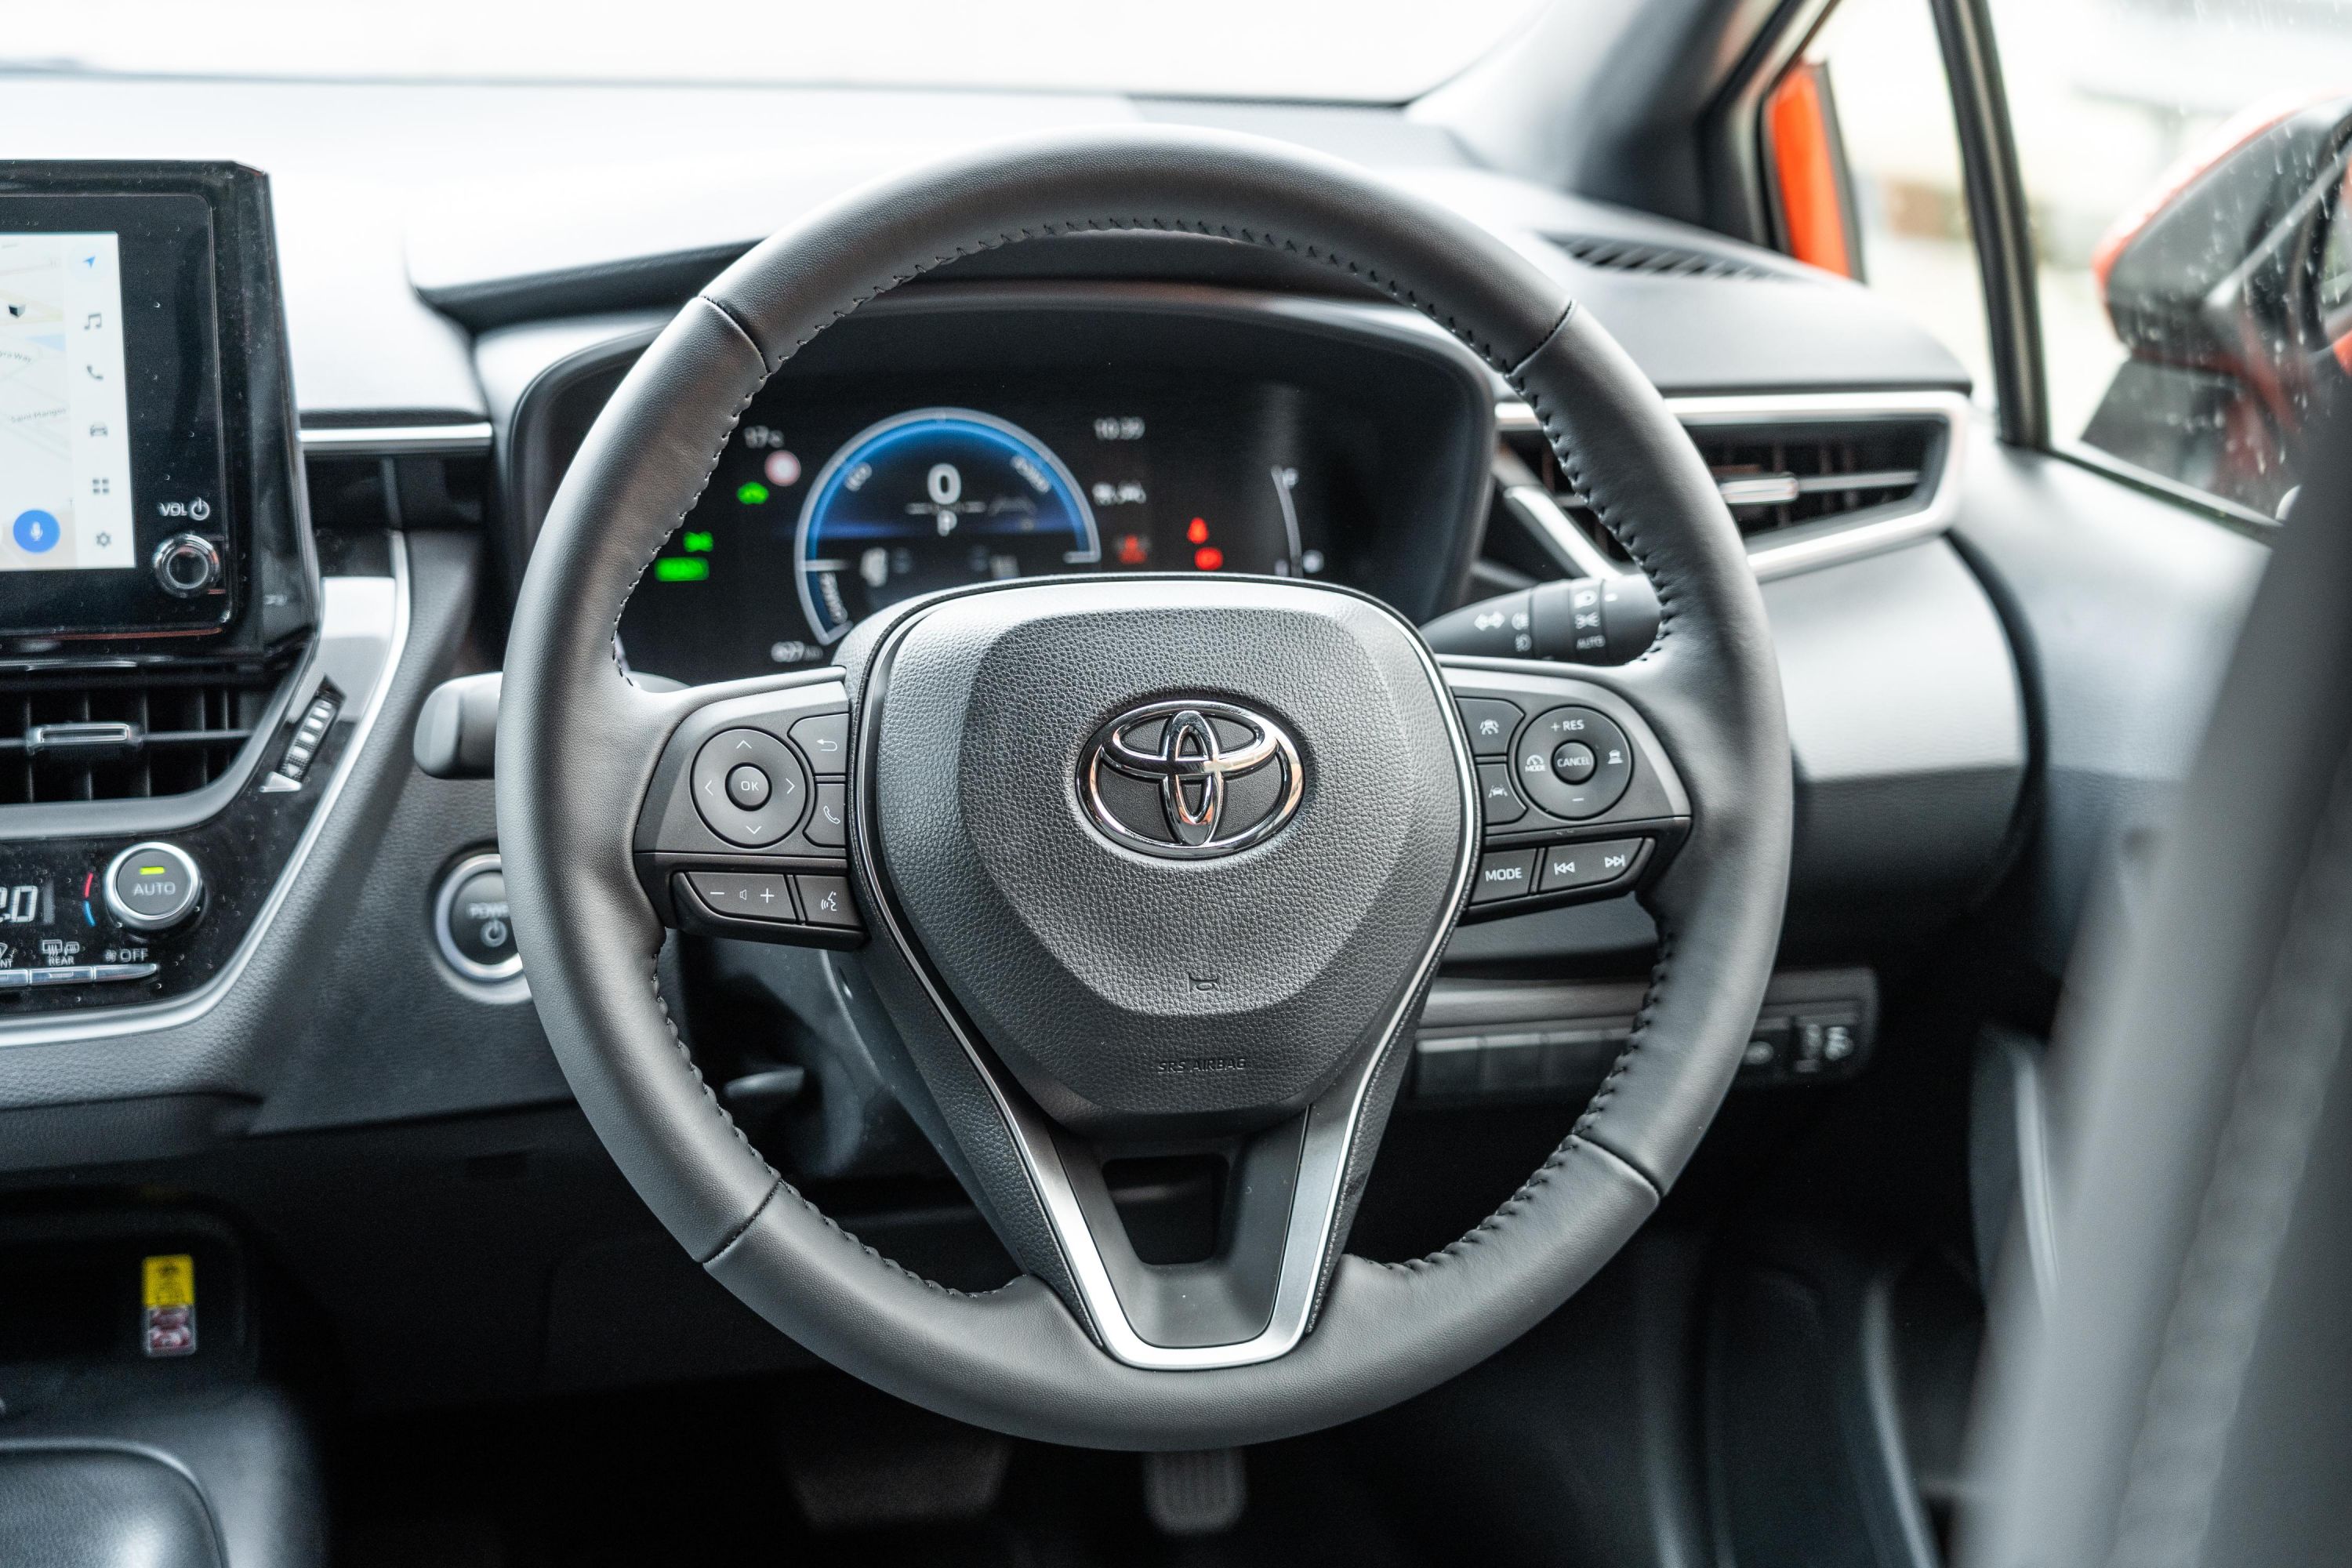 2021 Toyota Corolla Interior Review